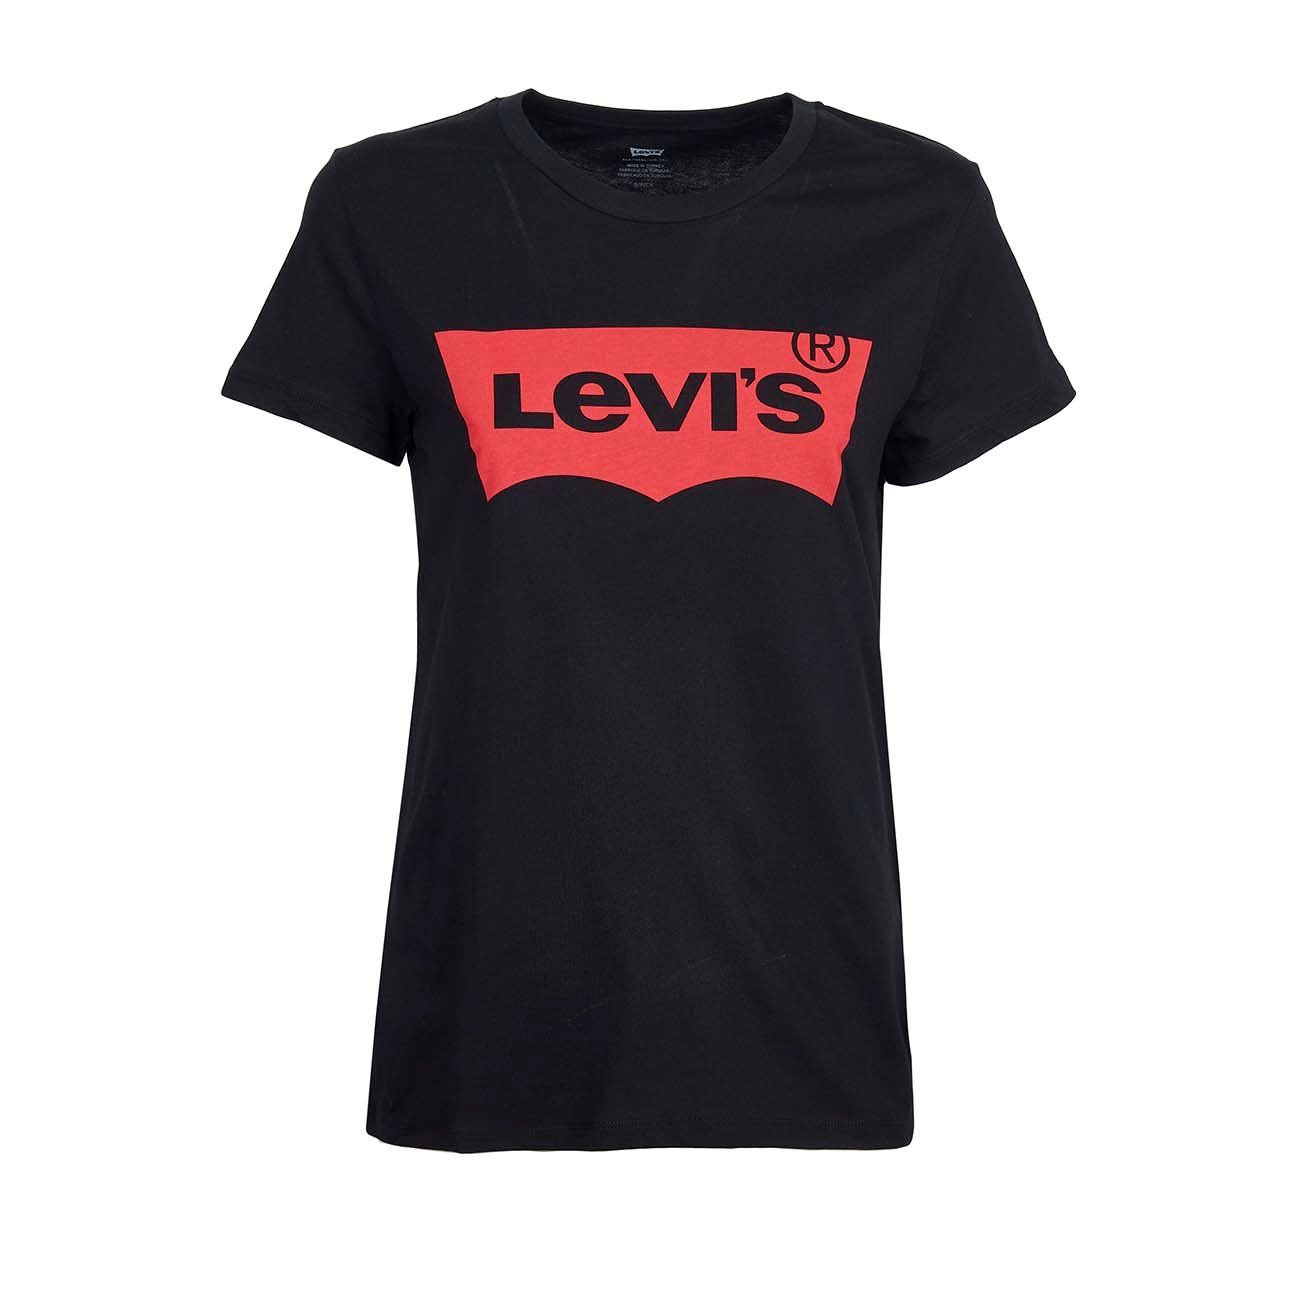 levis t shirt woman